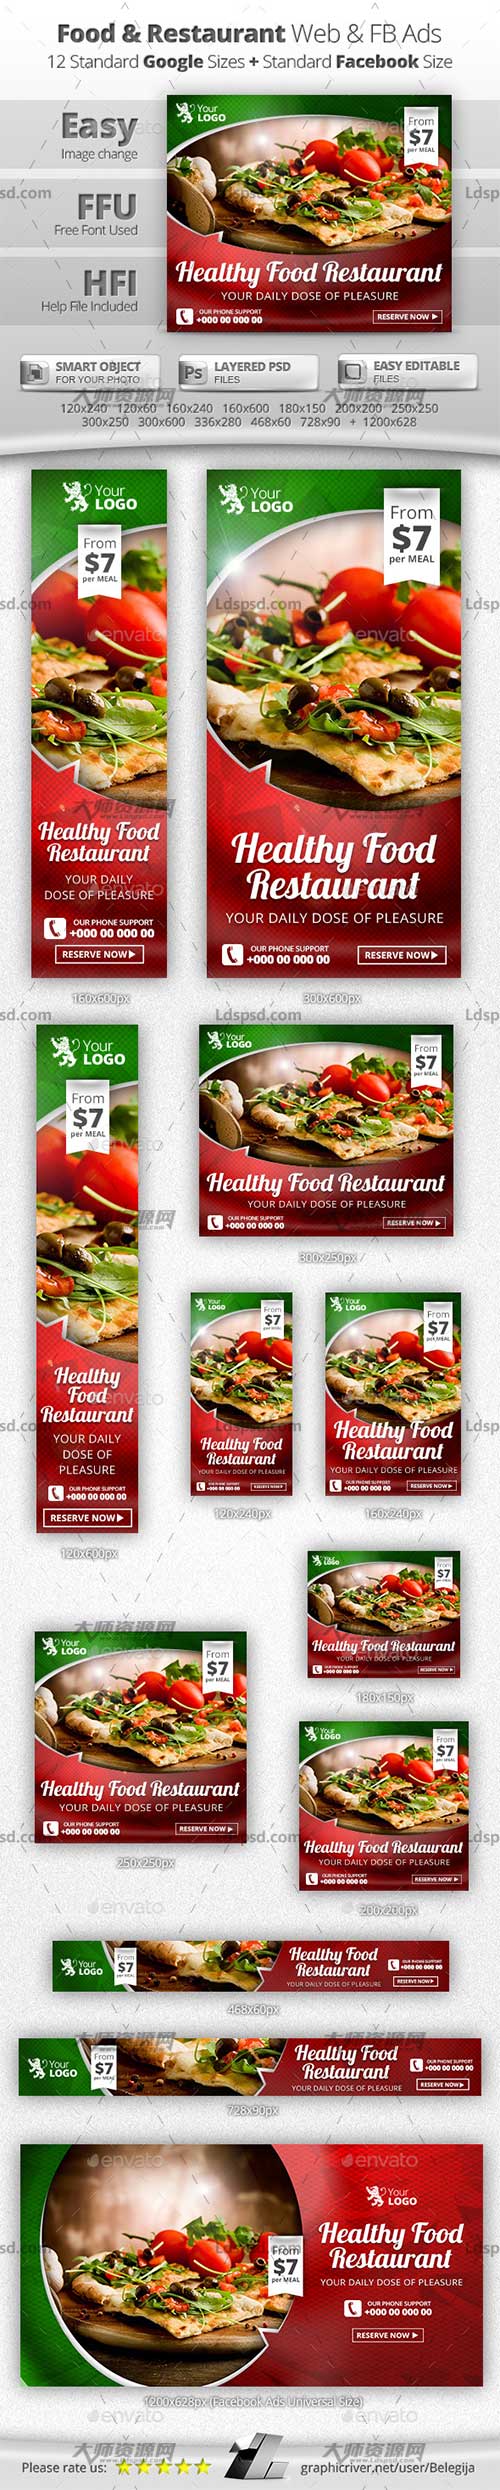 Food & Restaurant Web & Facebook Banners,网店对联/横幅广告模板(食品促销类)